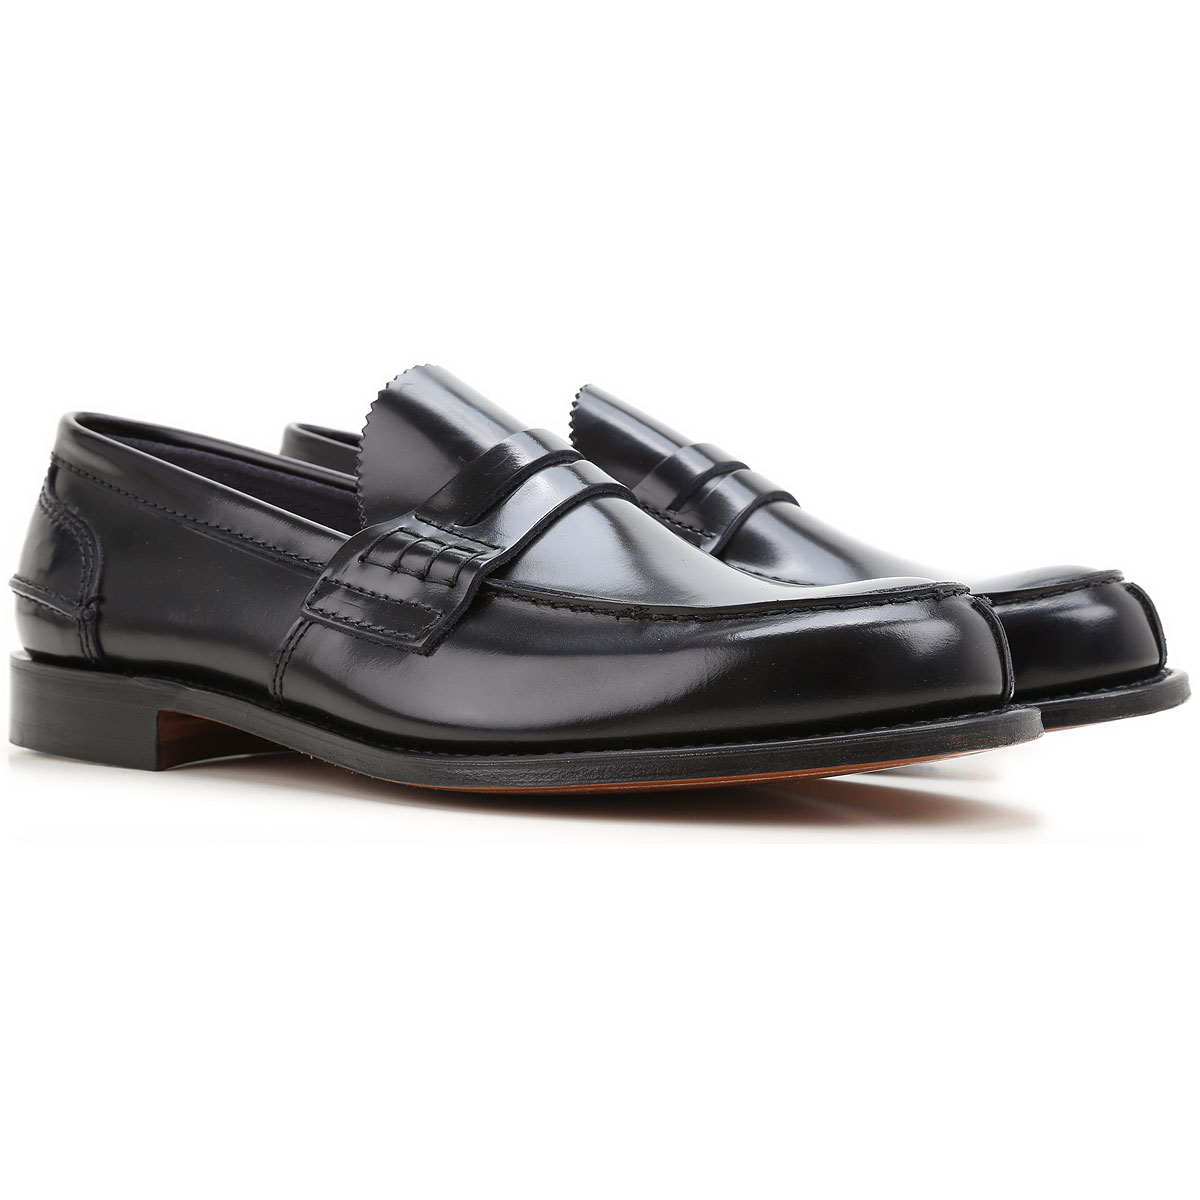 Mens Shoes Church's, Style code: tunbridge-7056-51